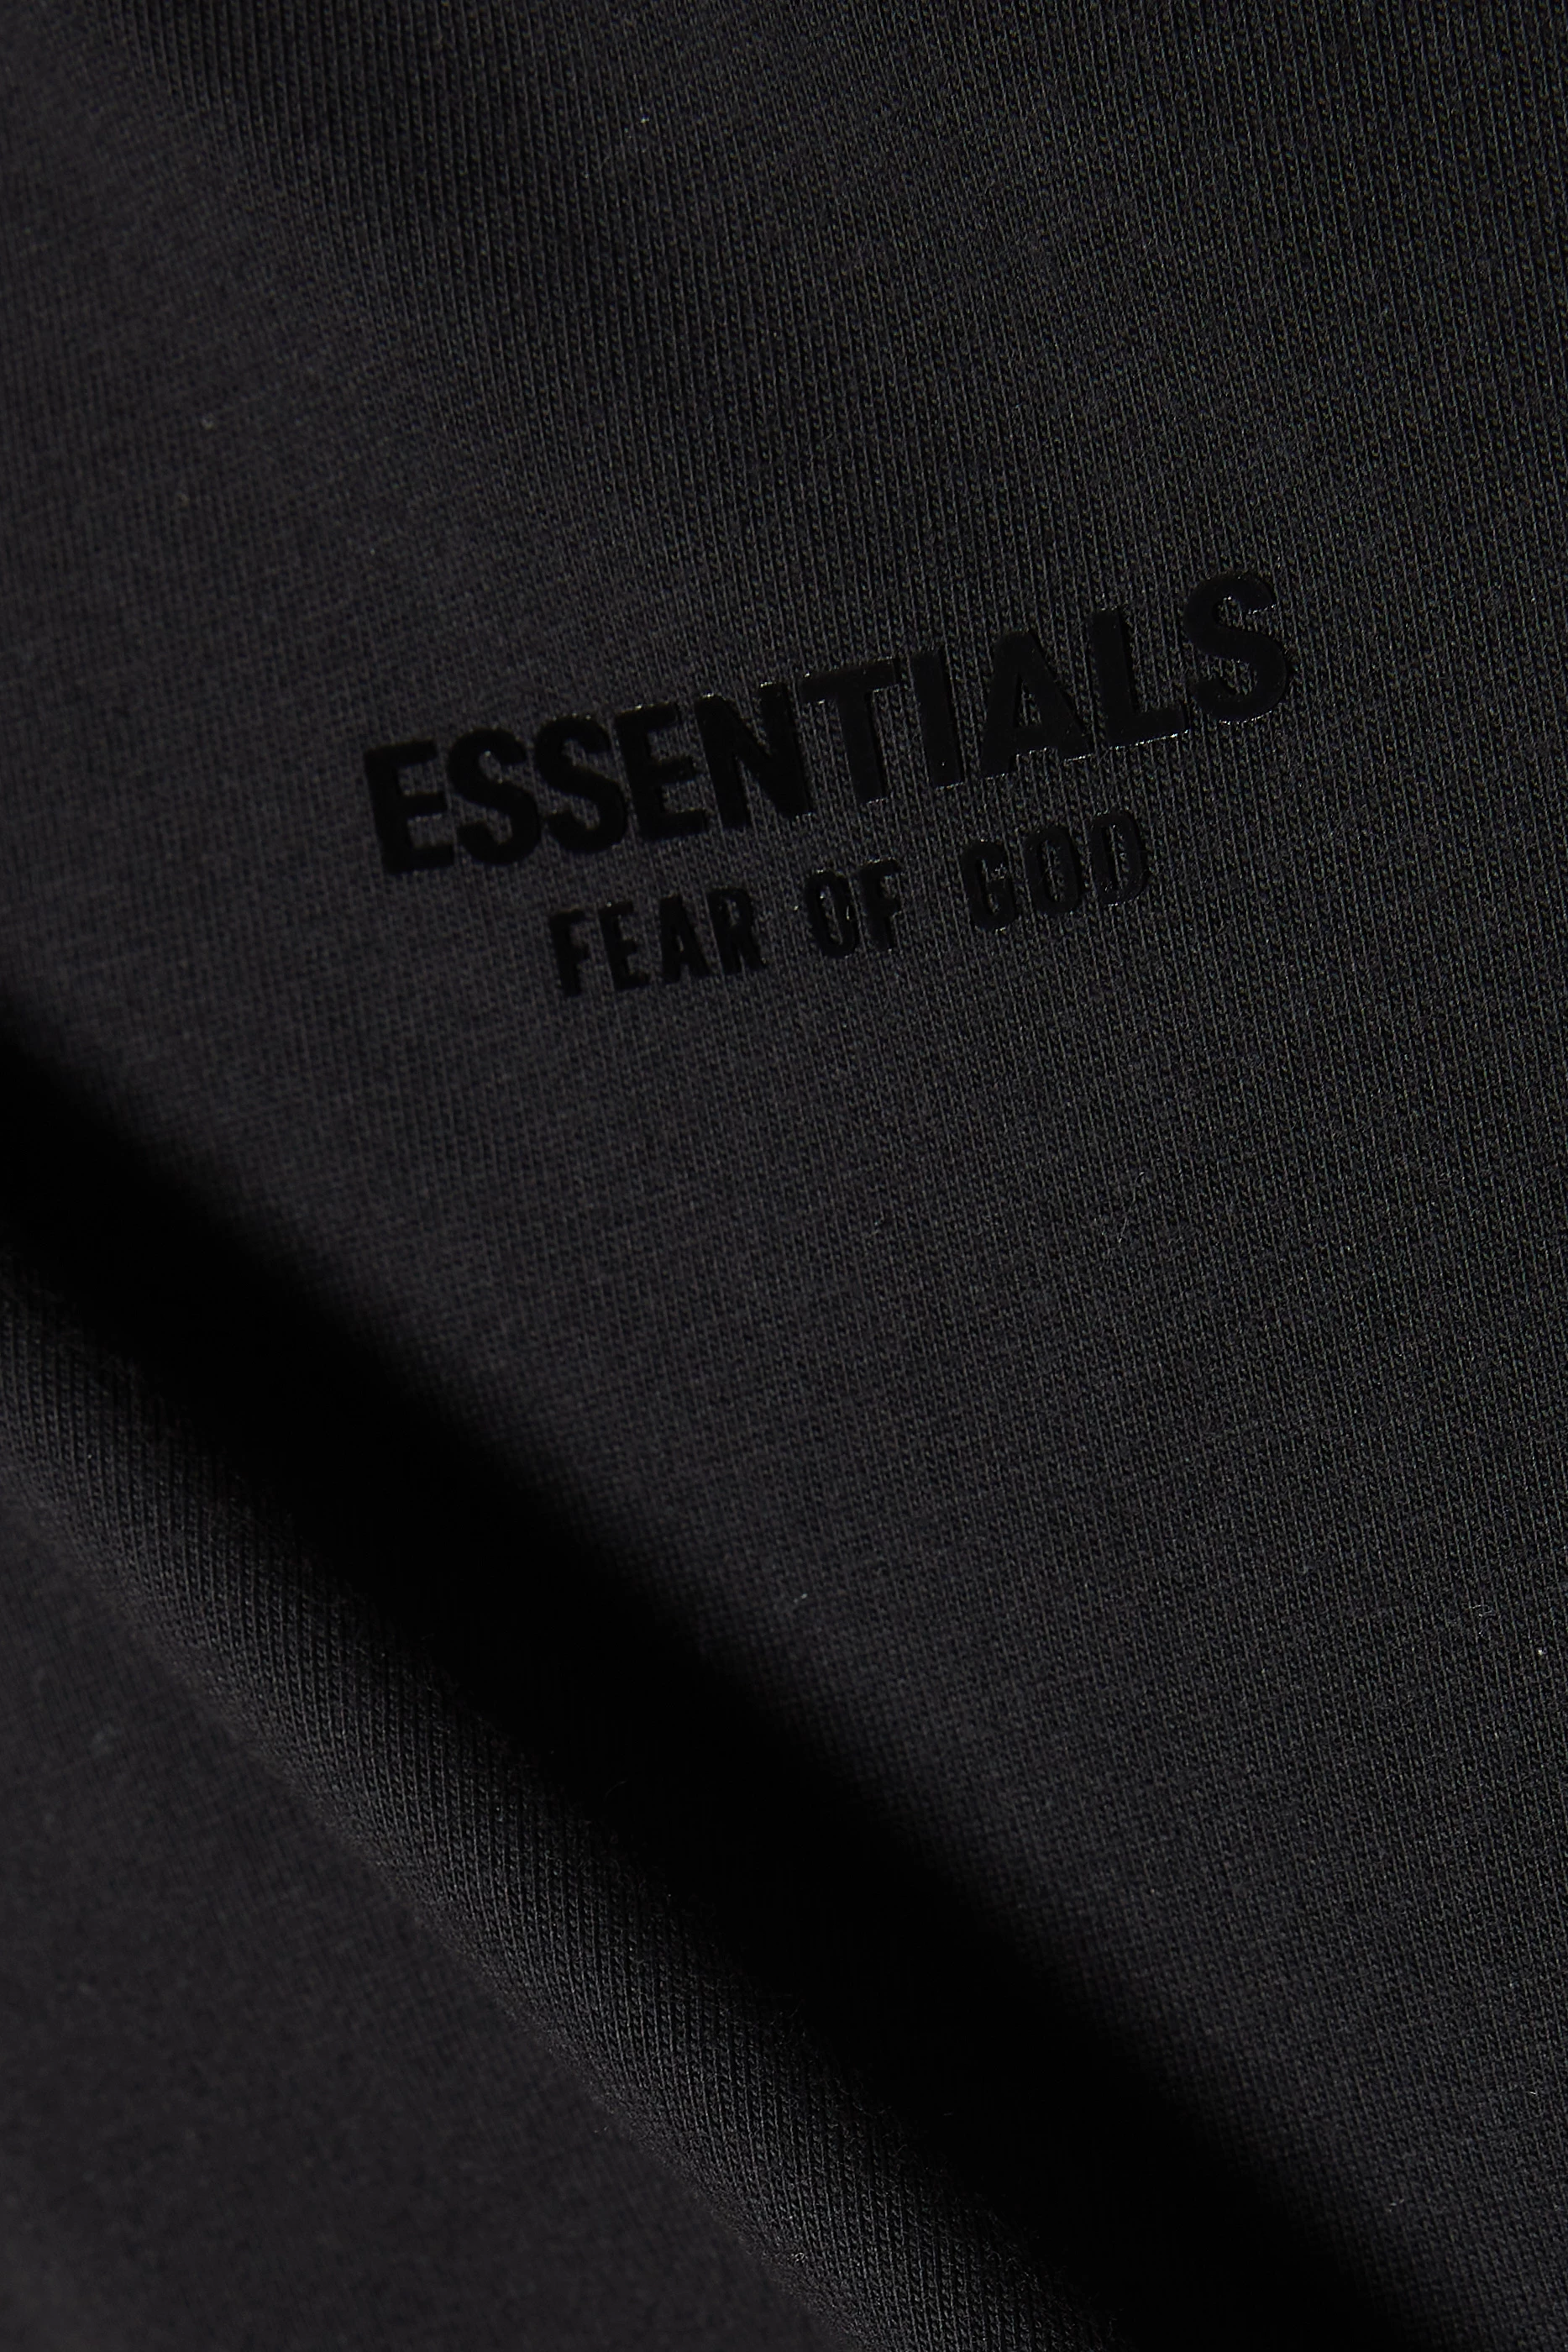 Essentials Mens 2-Pack Performance Pintec T-Shirt : :  Clothing, Shoes & Accessories